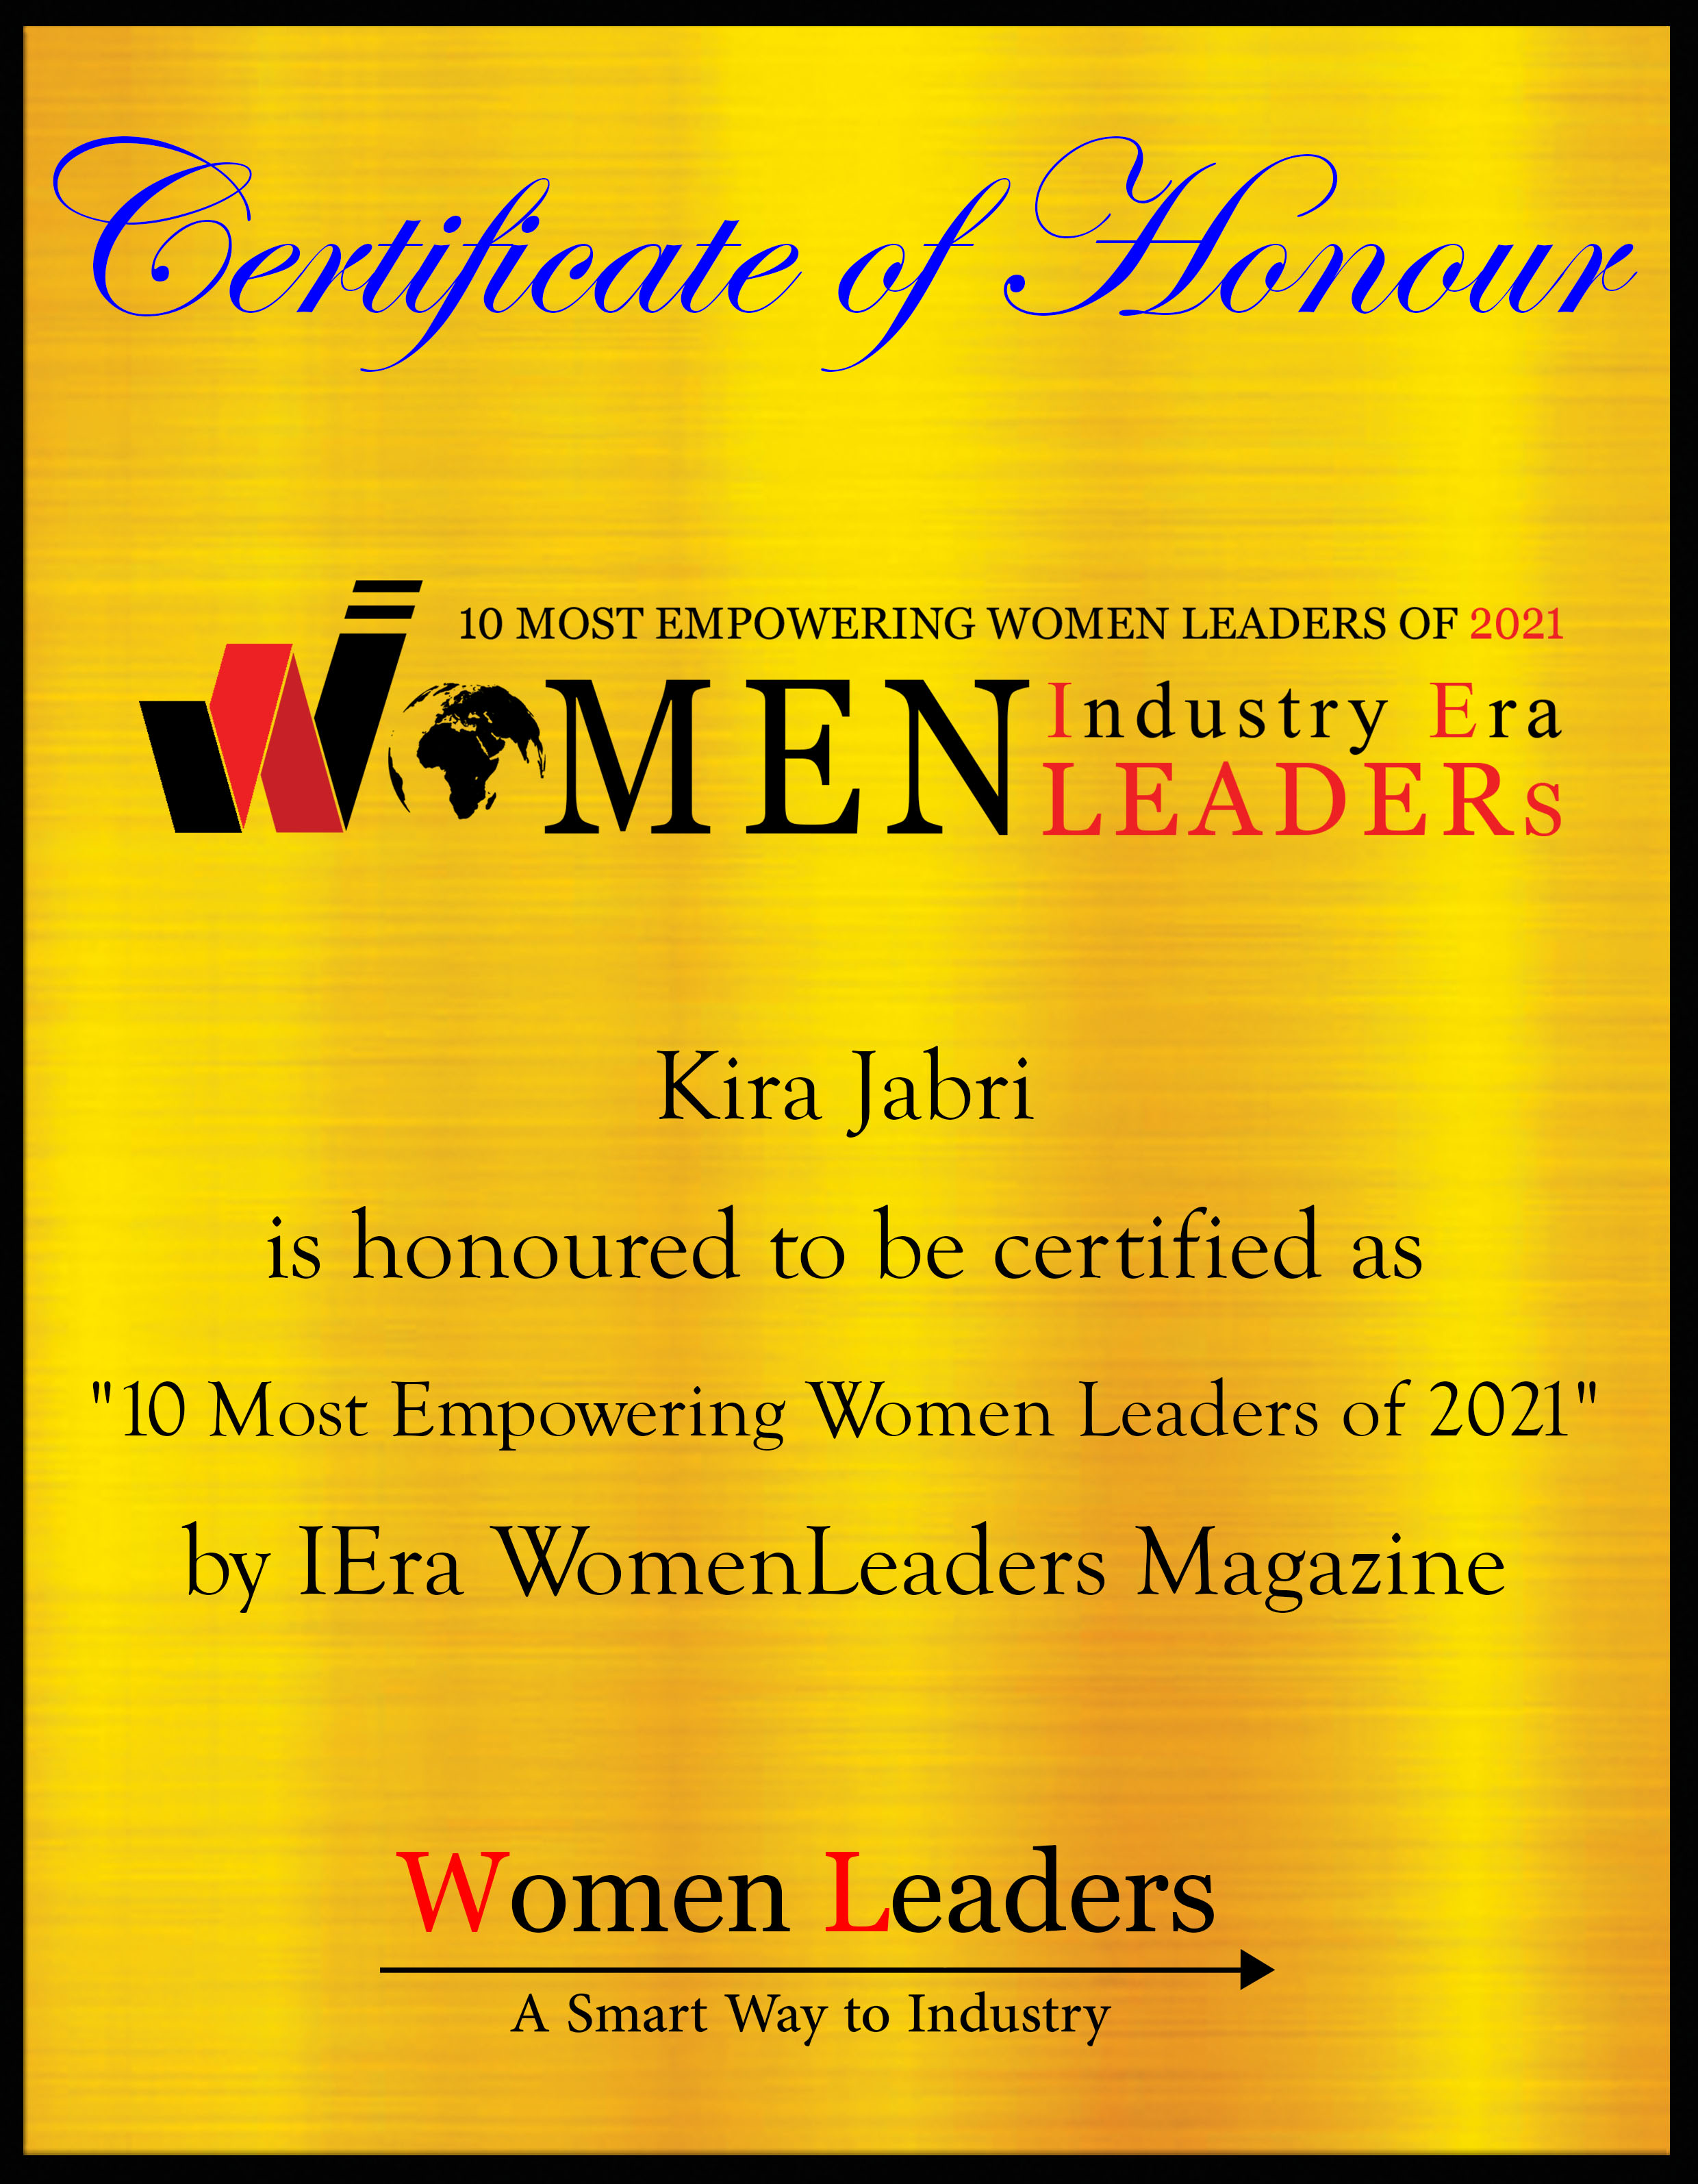 Kira Jabri, COO of EMMA International, Most Empowering Women Leaders of 2021